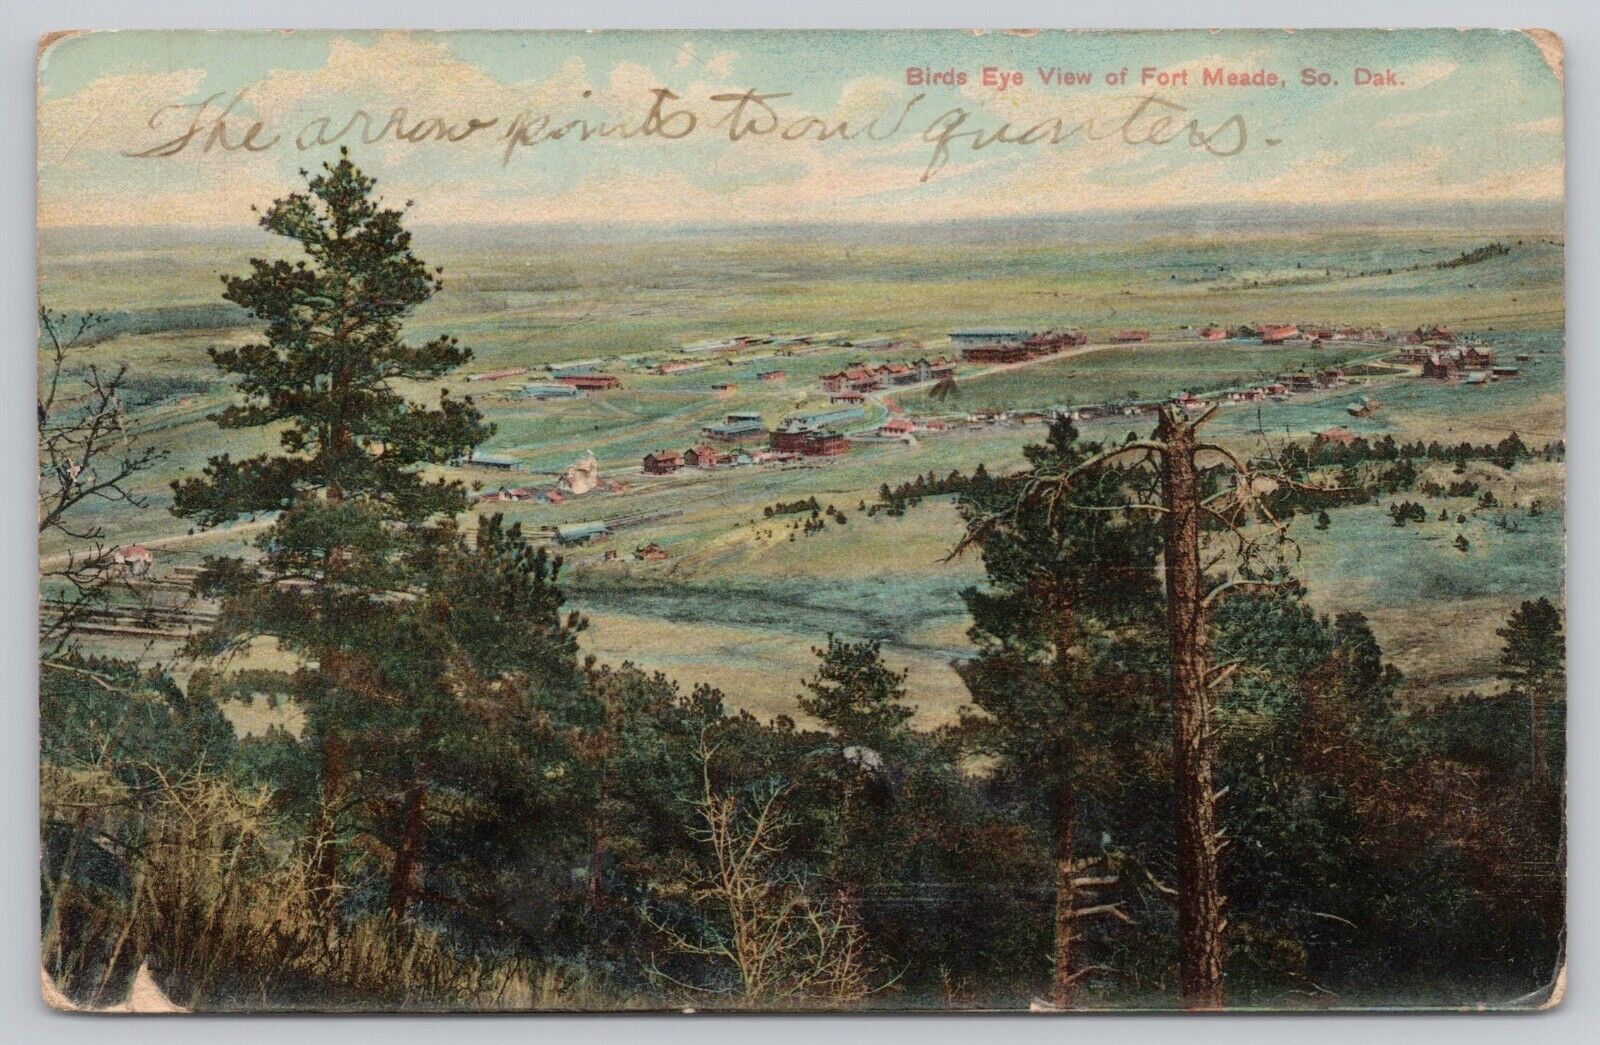 Fort Meade South Dakota, Birds Eye Scenic View, Vintage Postcard